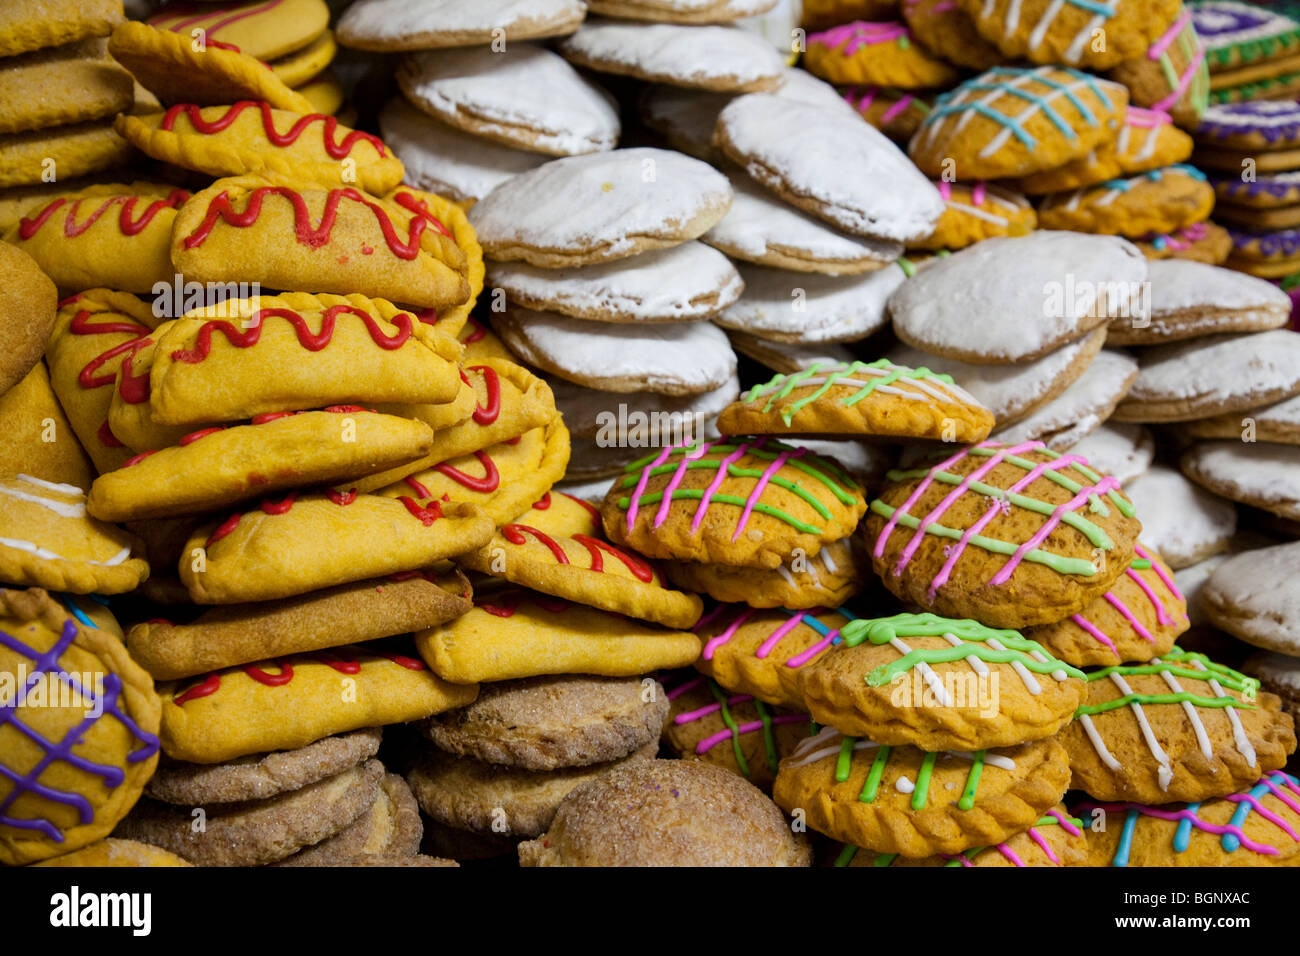 Mercado de dulces y Artesanias. San Cristóbal de las Casas, Chiapas Mexico  Stock Photo - Alamy